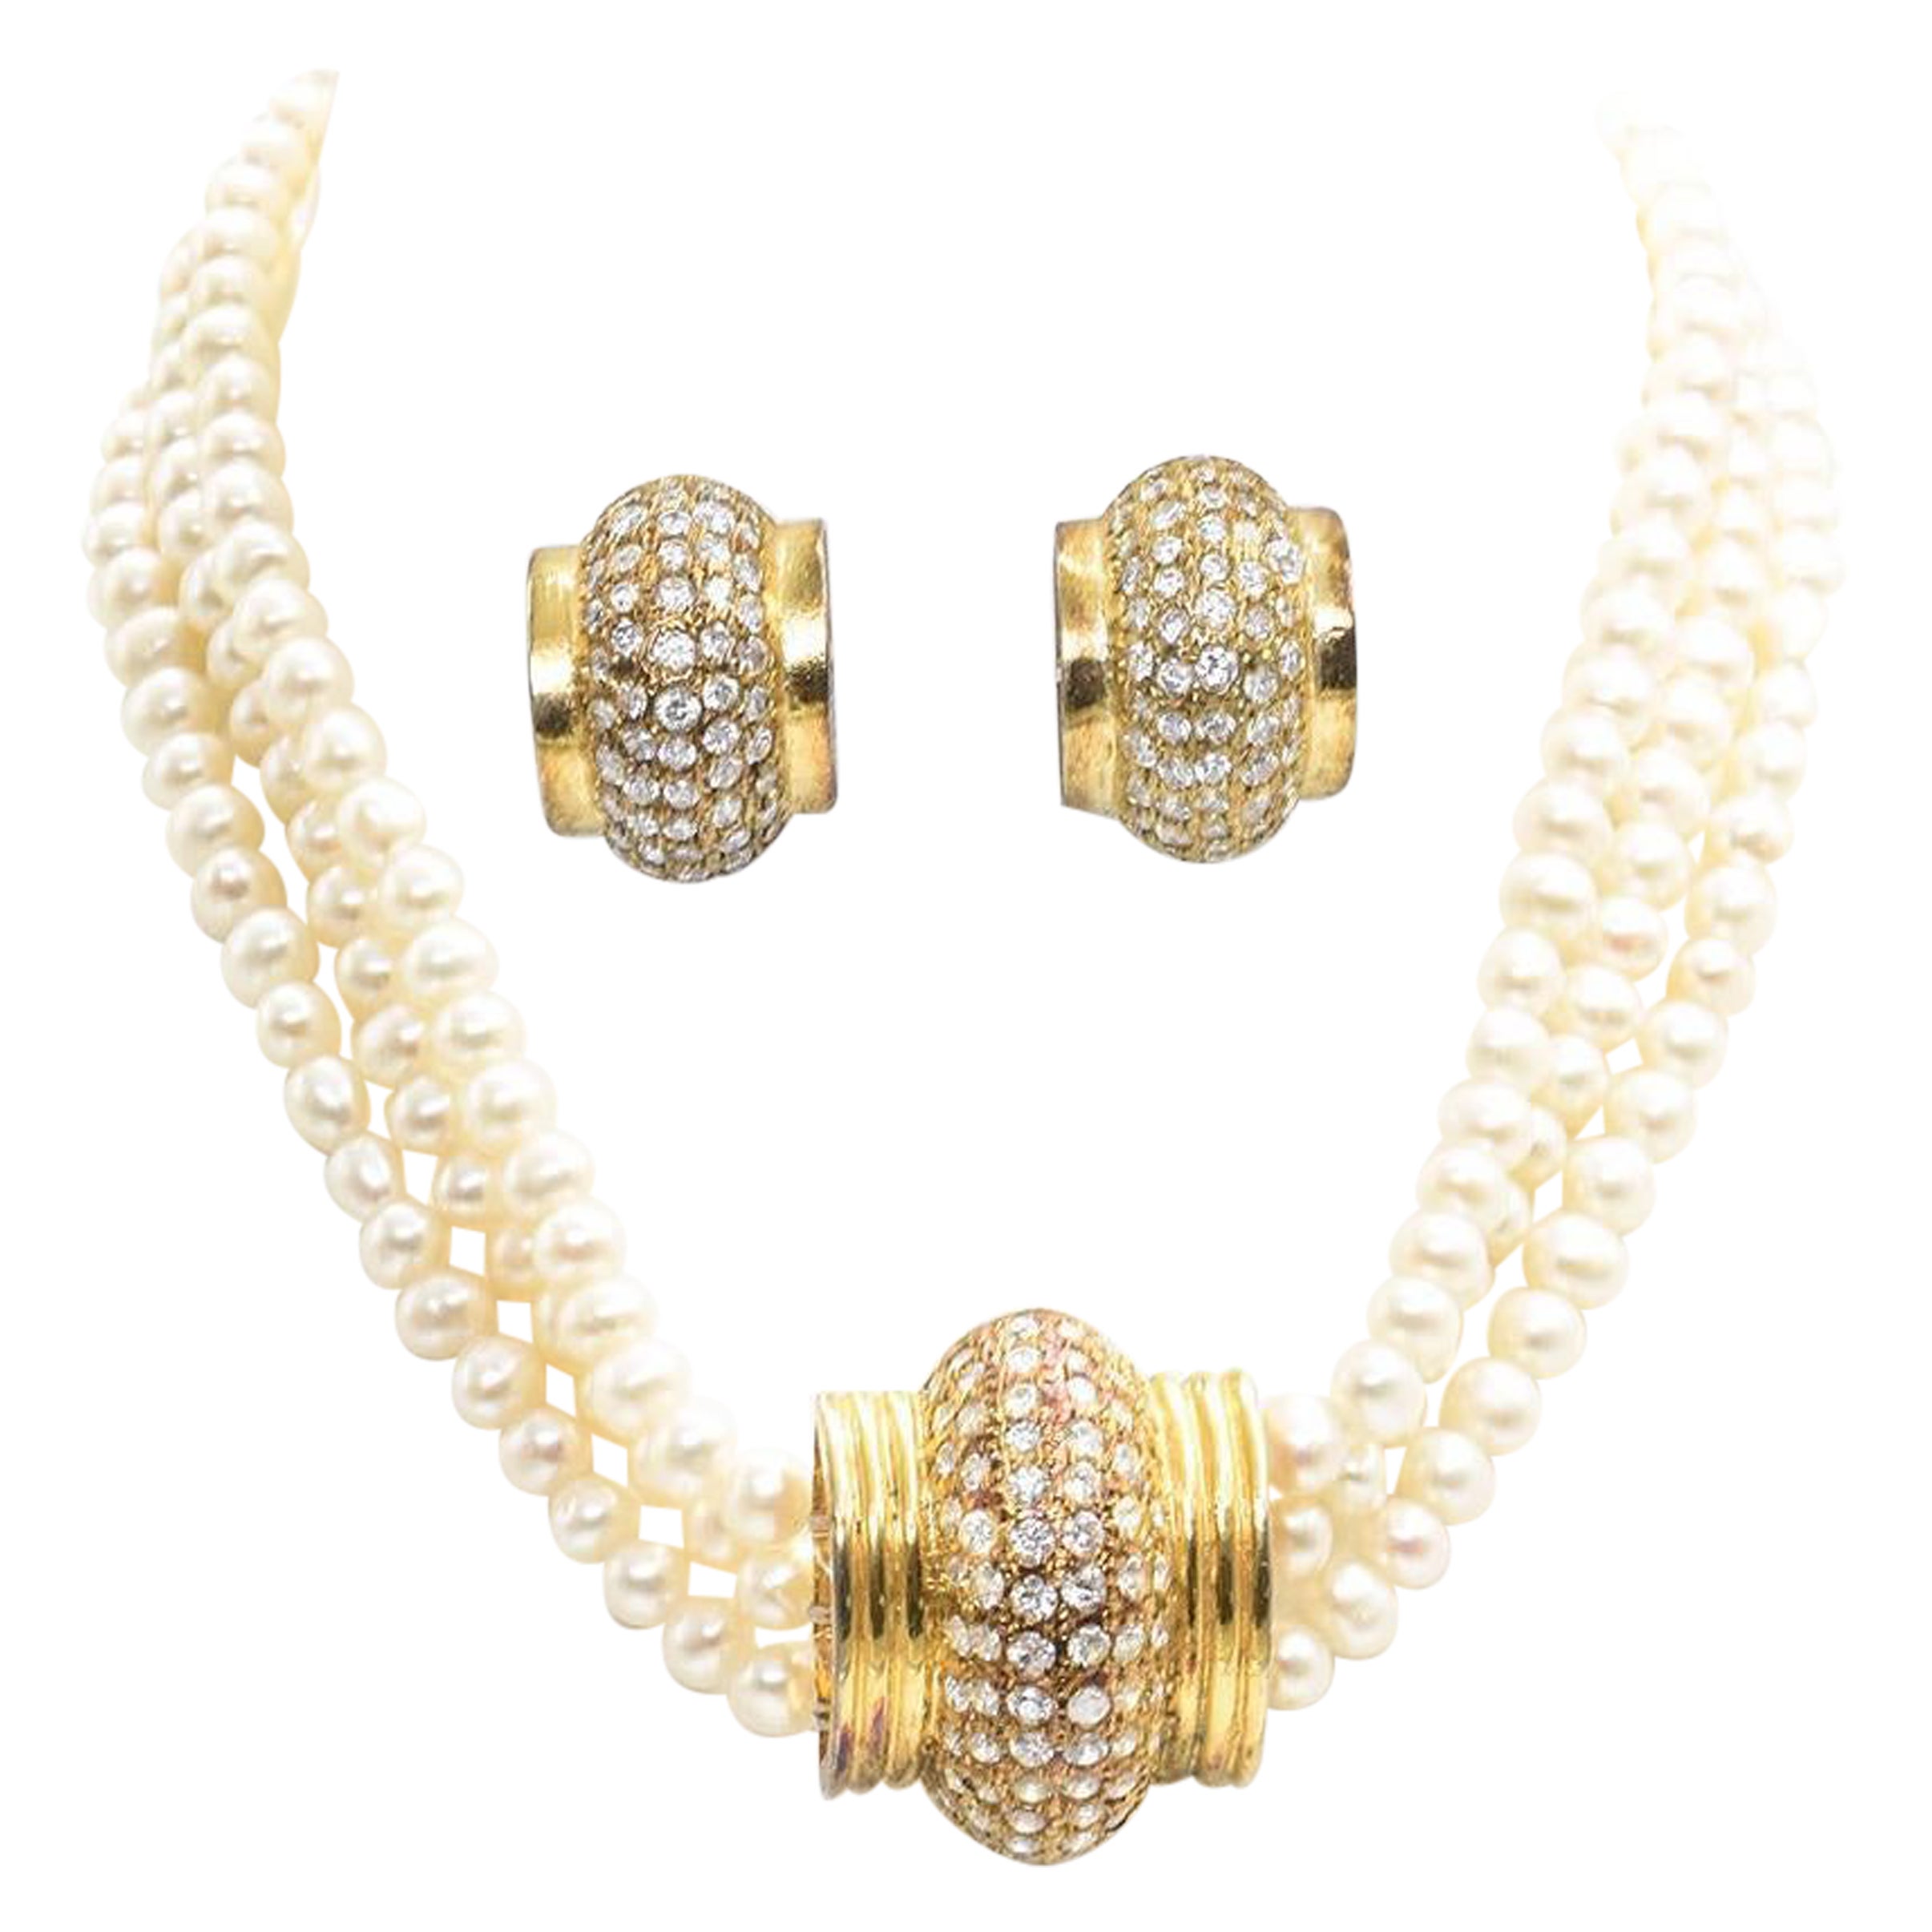 Triple Strand Pearl Rhinestone Gilt Gold Choker Collar Necklace and Earrings Set